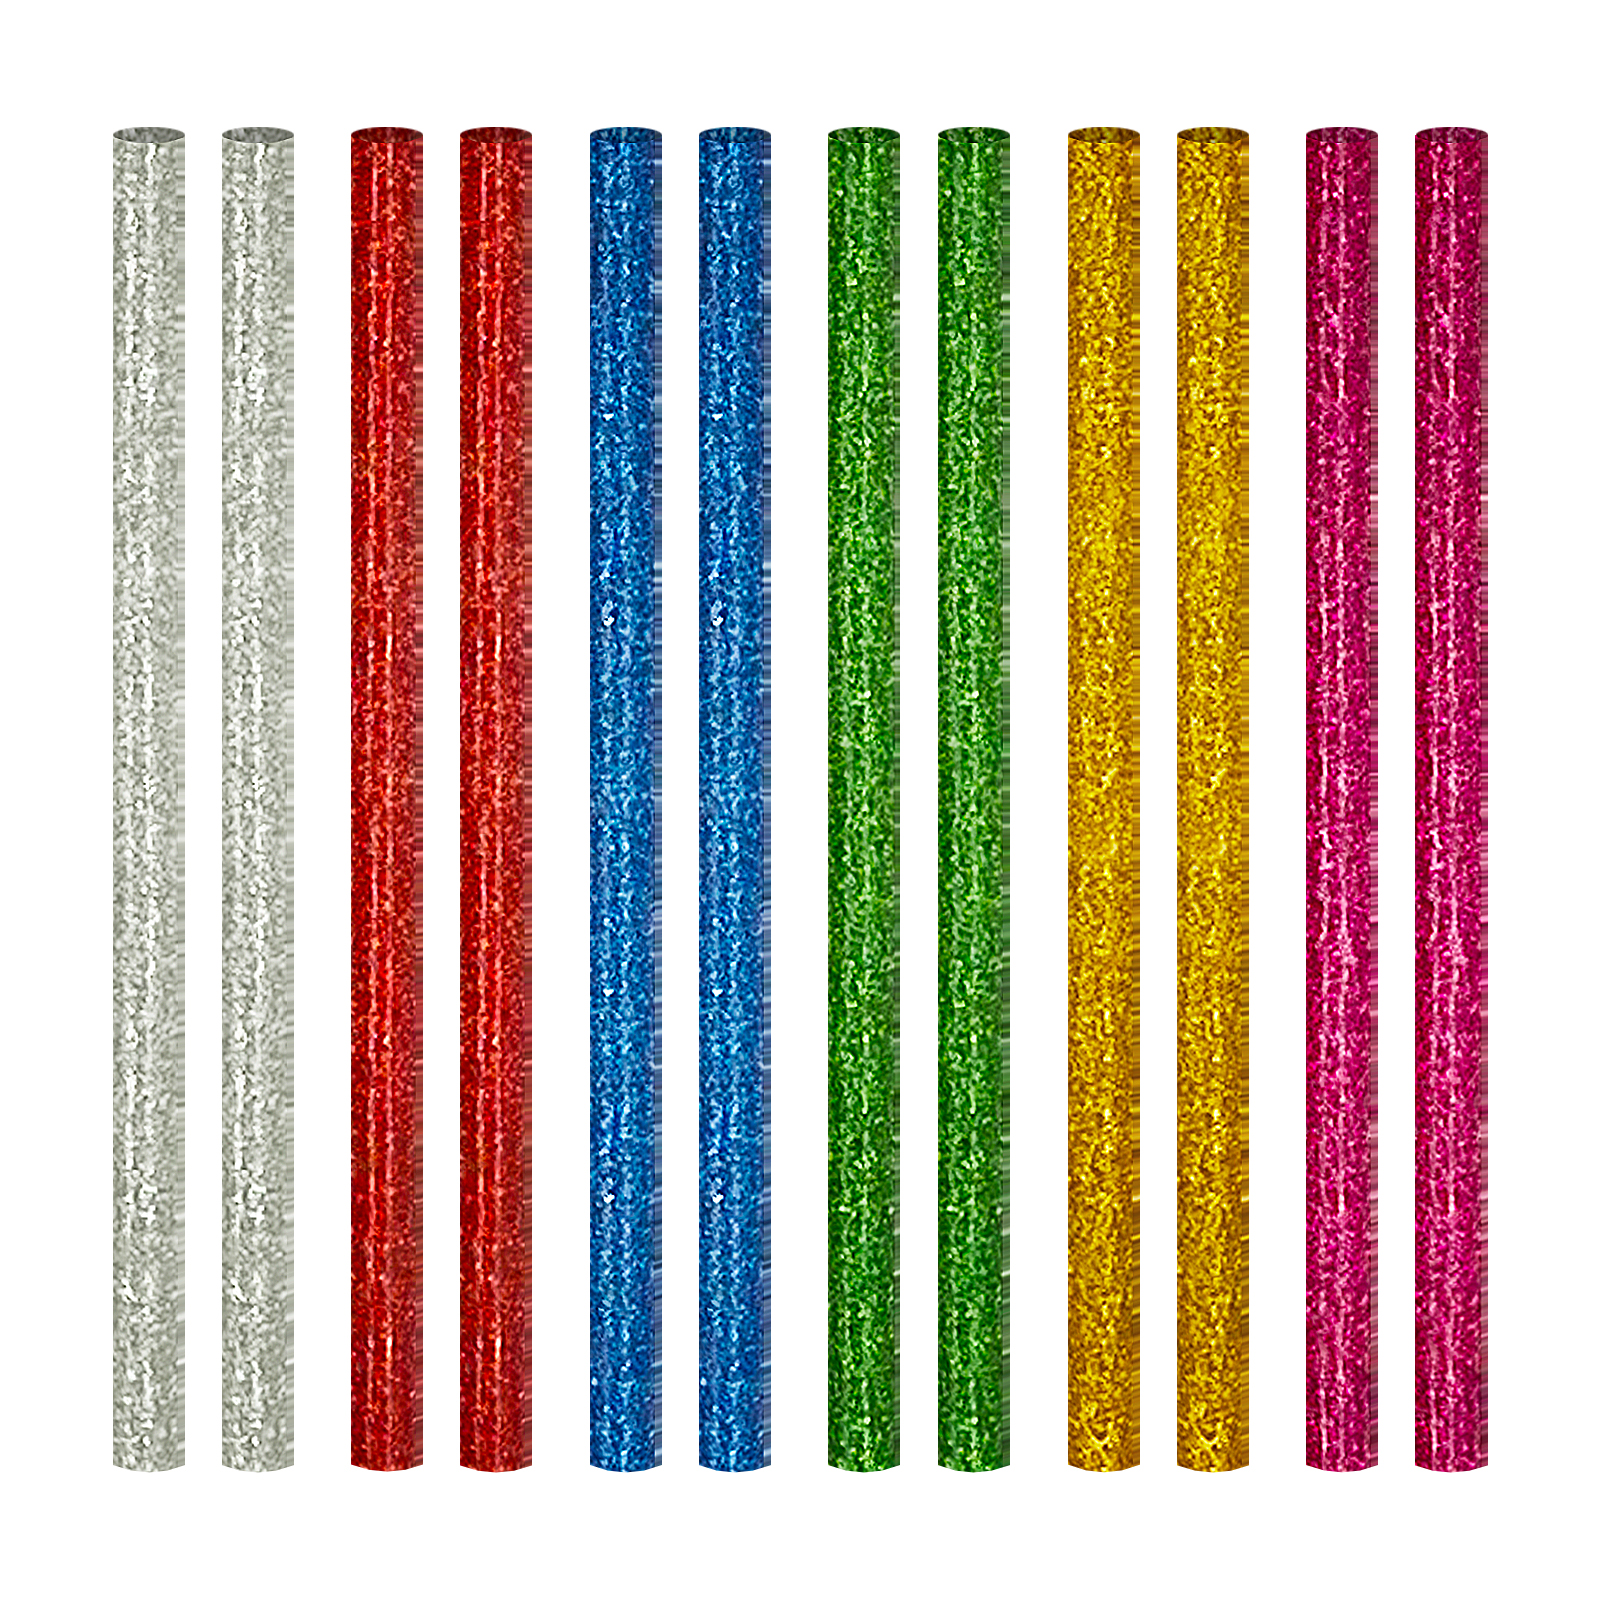 KEILEOHO 140 Pcs Colored Glitter Hot Melt Glue Sticks, 14 Colors Mini Glue Sticks, Mini Hot Glue Sticks for Arts Crafts, Home General Repair, Holiday